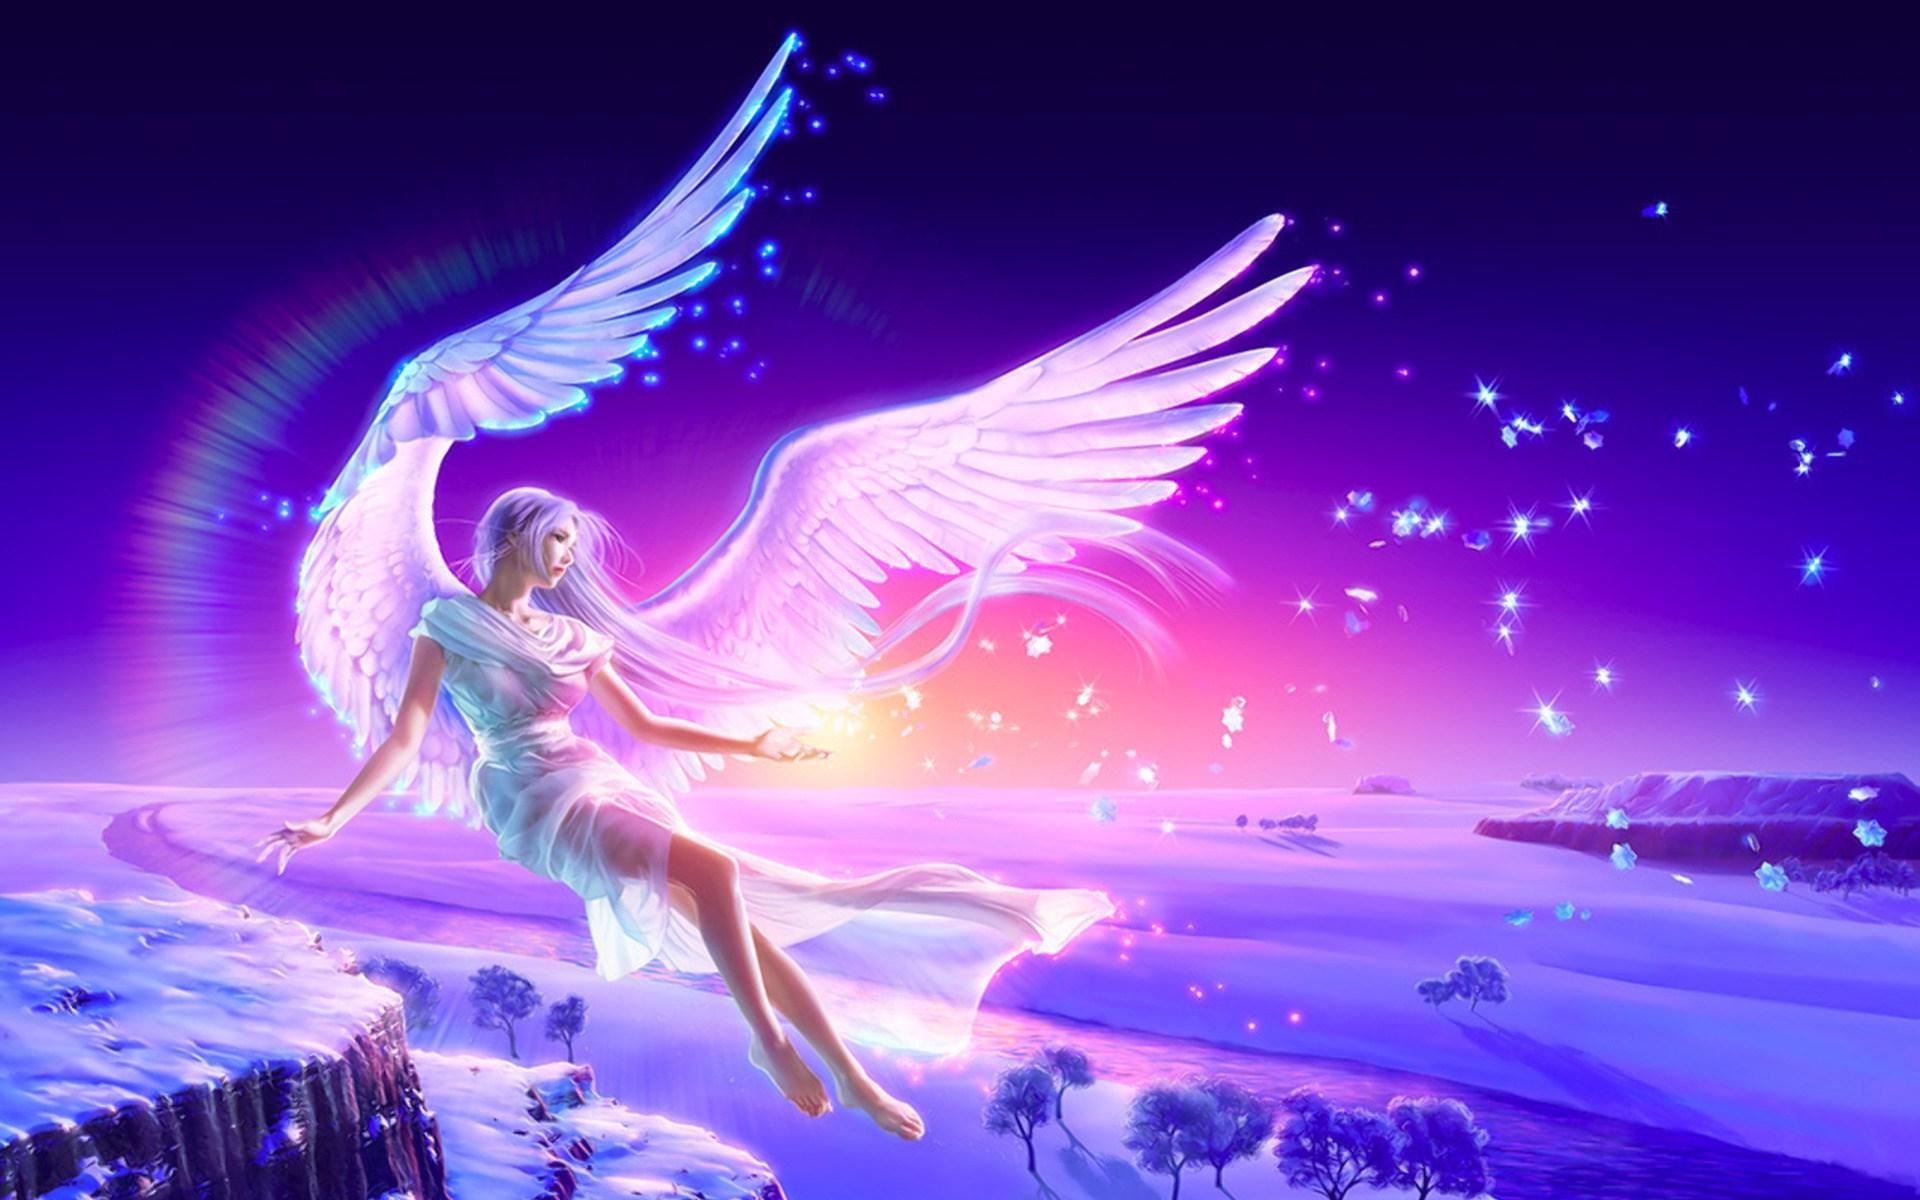 imagen angel-blonde-girl-anime-wings-flying-winter-snow - Copy (2).jpg  by Sekai